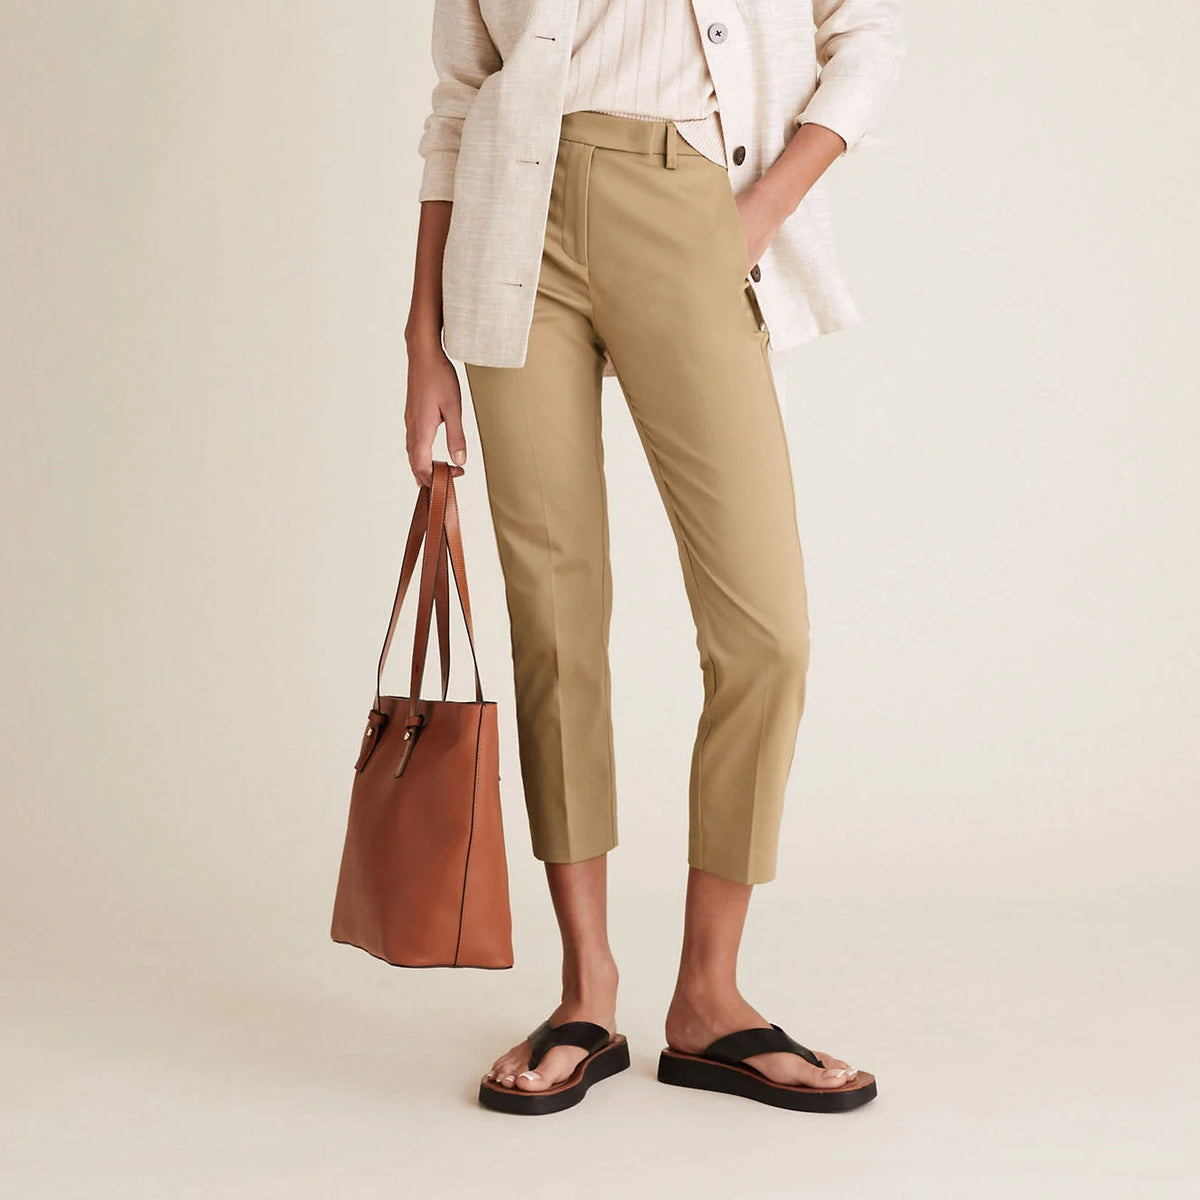 M&S Mia Slim Fit 7/8 Length Trousers Beige / 6 / Reg